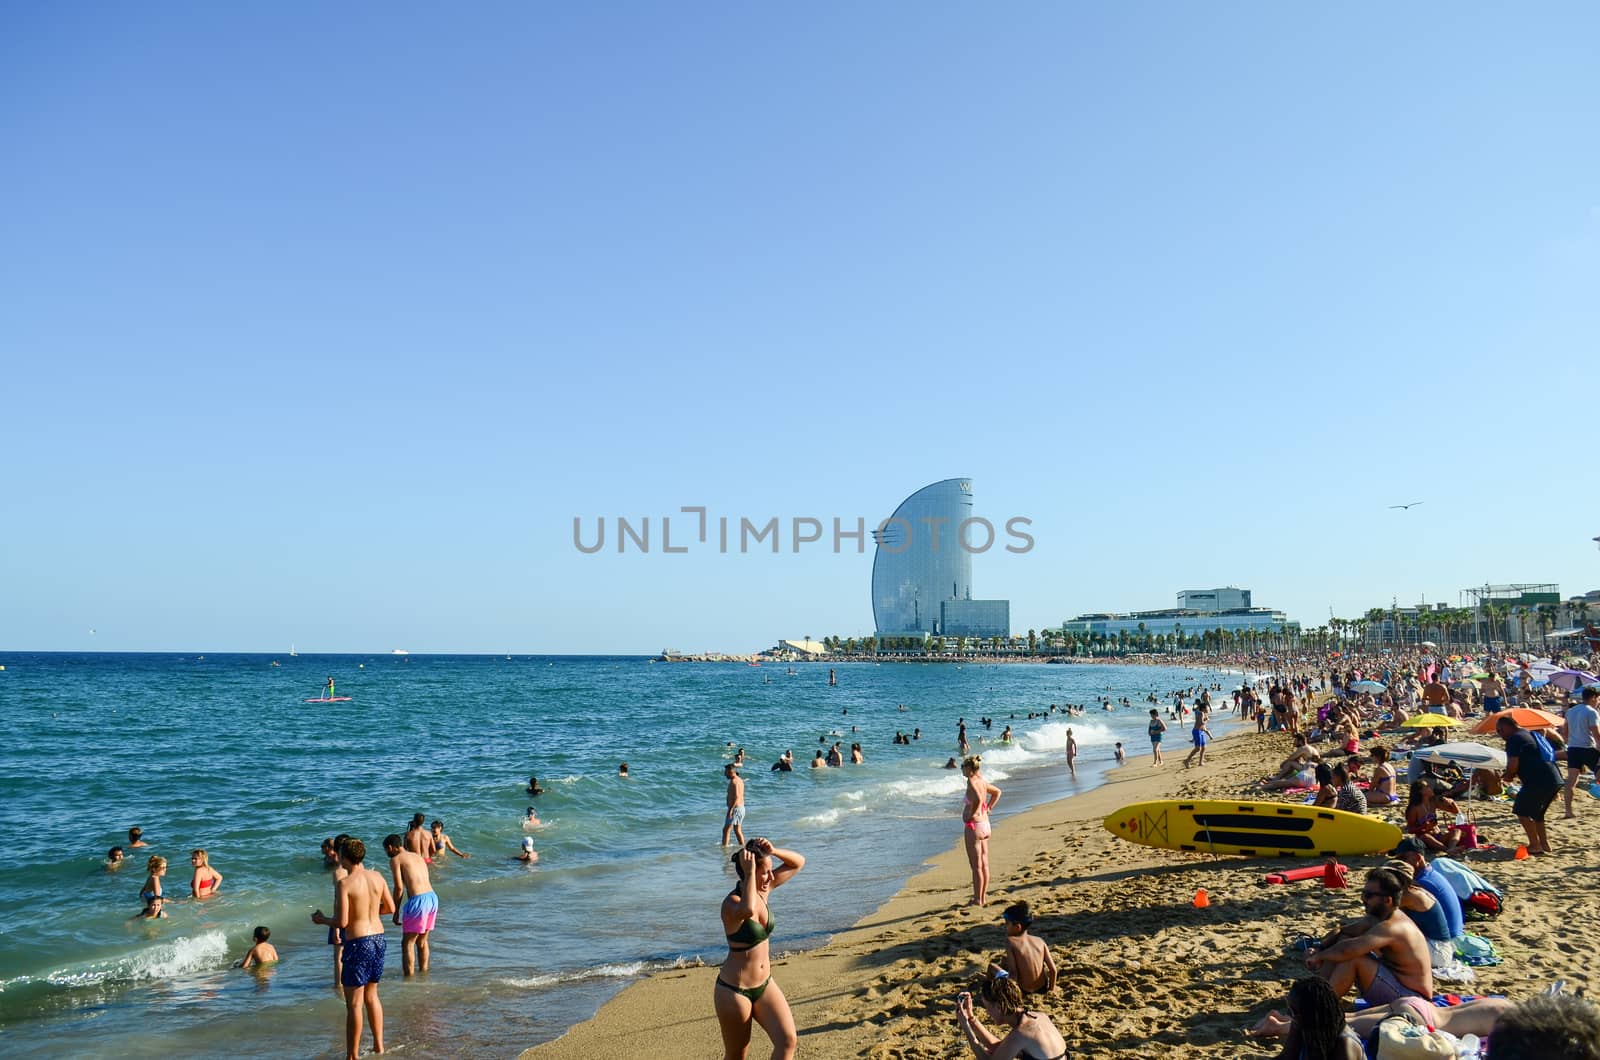 Barceloneta - Barcelona's most popular beach on the Mediterranean sea